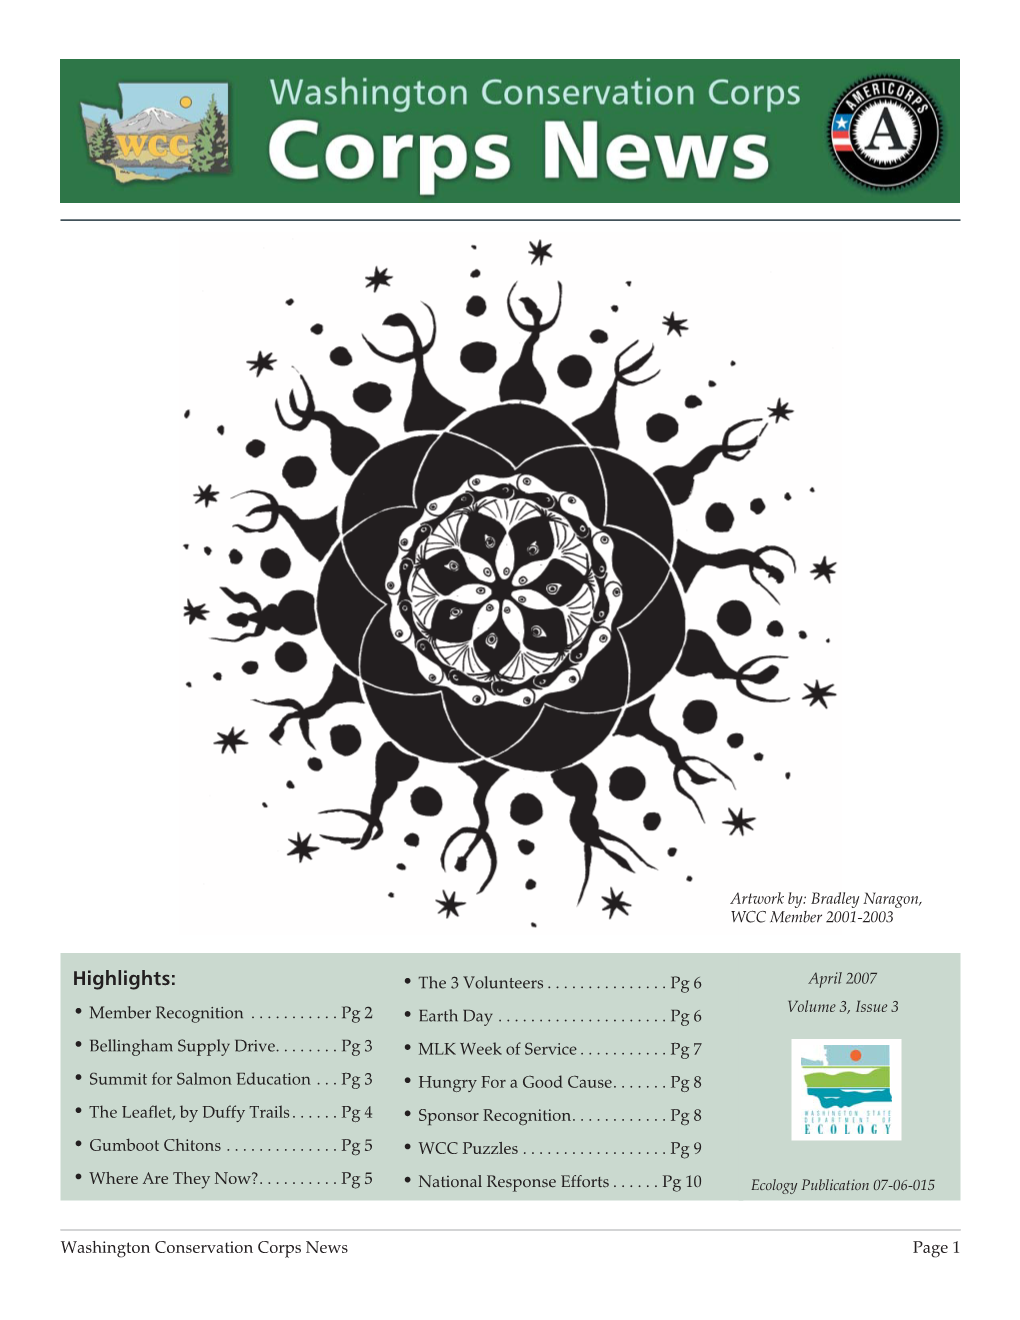 Washington Conservation Corps News, Spring 07